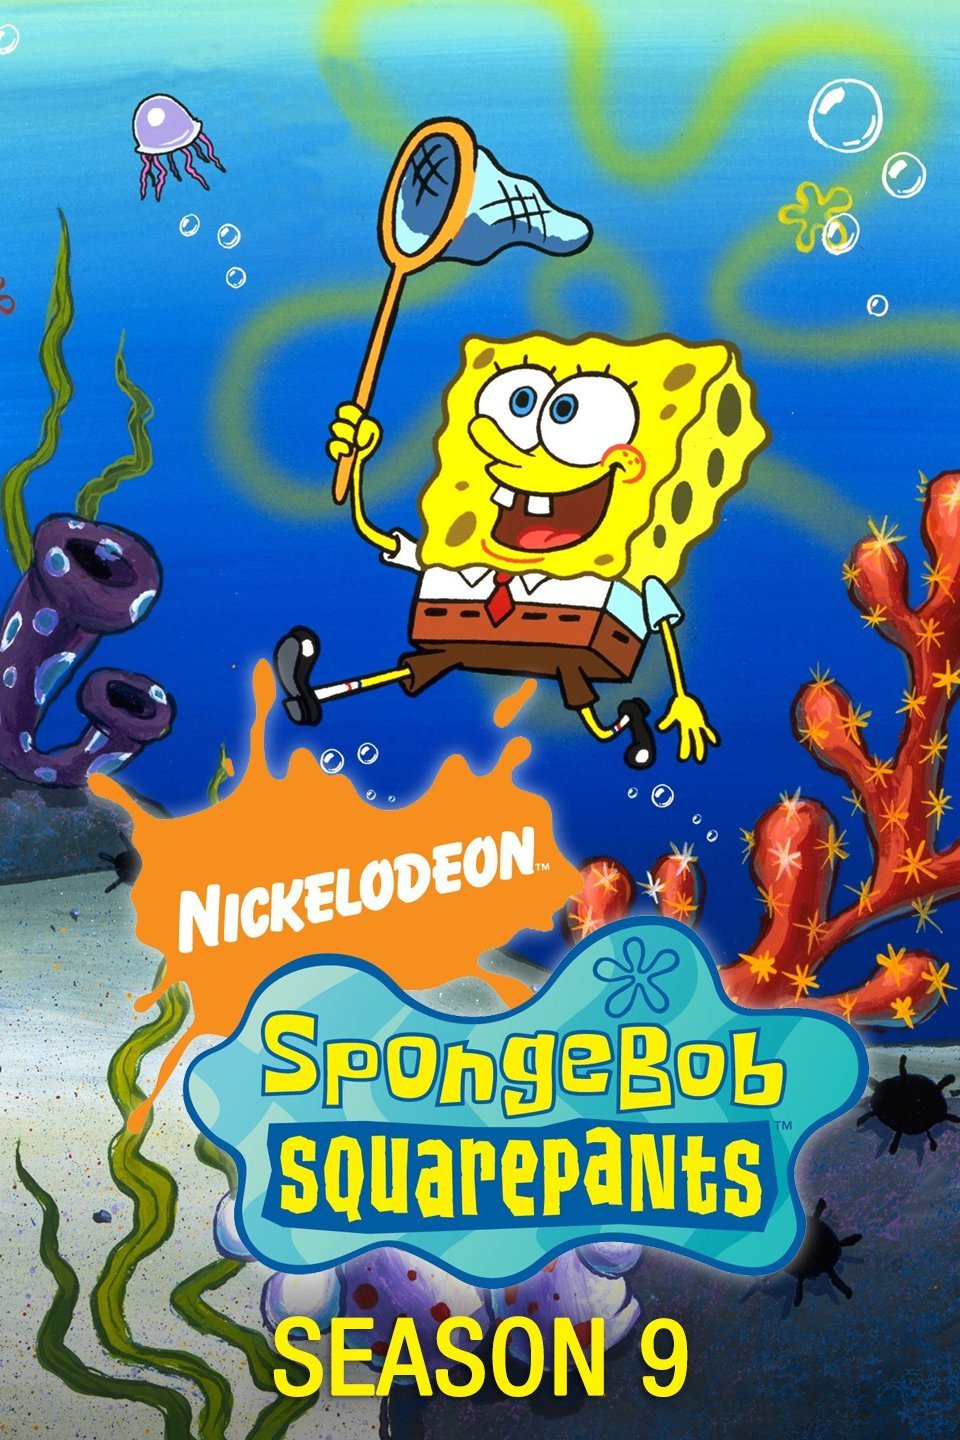 Spongebob squarepants episodes 2012 - smarterpsado